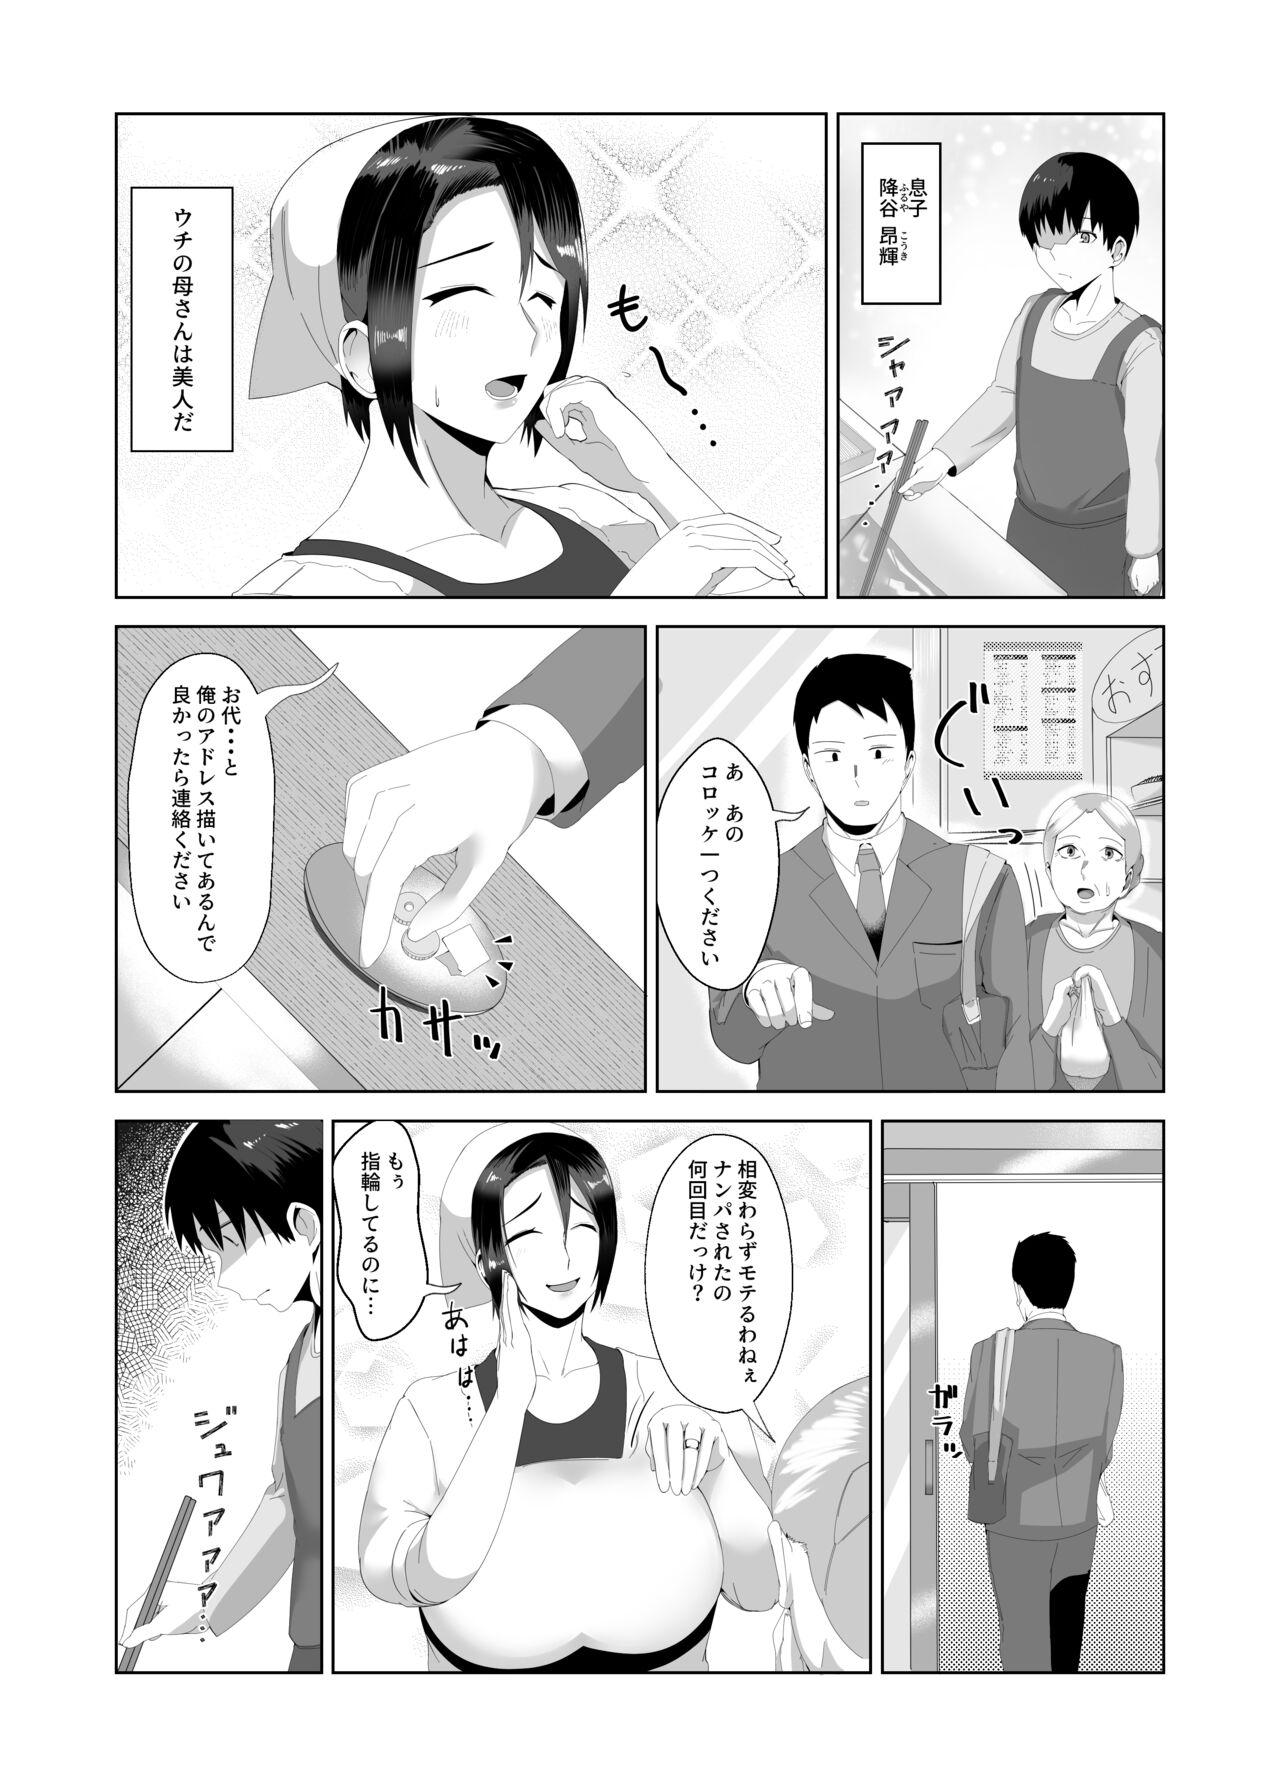 T Girl Kaasanwa kanbanmusume nikuyokuni kogaretaboshino futsuya Bdsm - Page 2